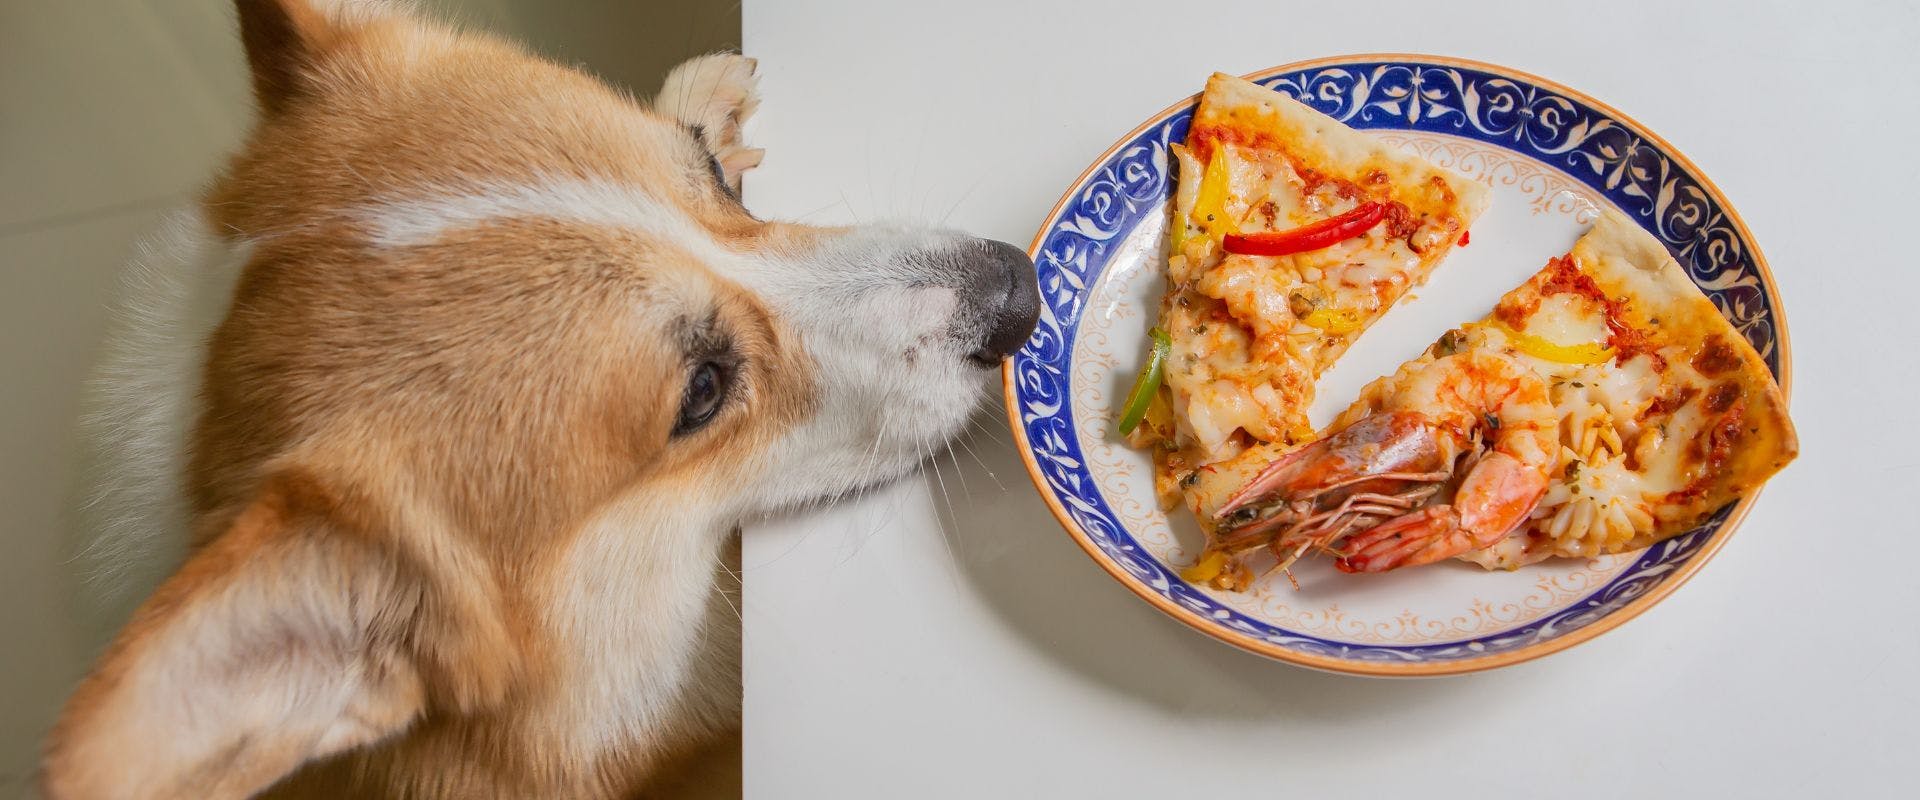 Corgi dog sniffing tomato on pizza